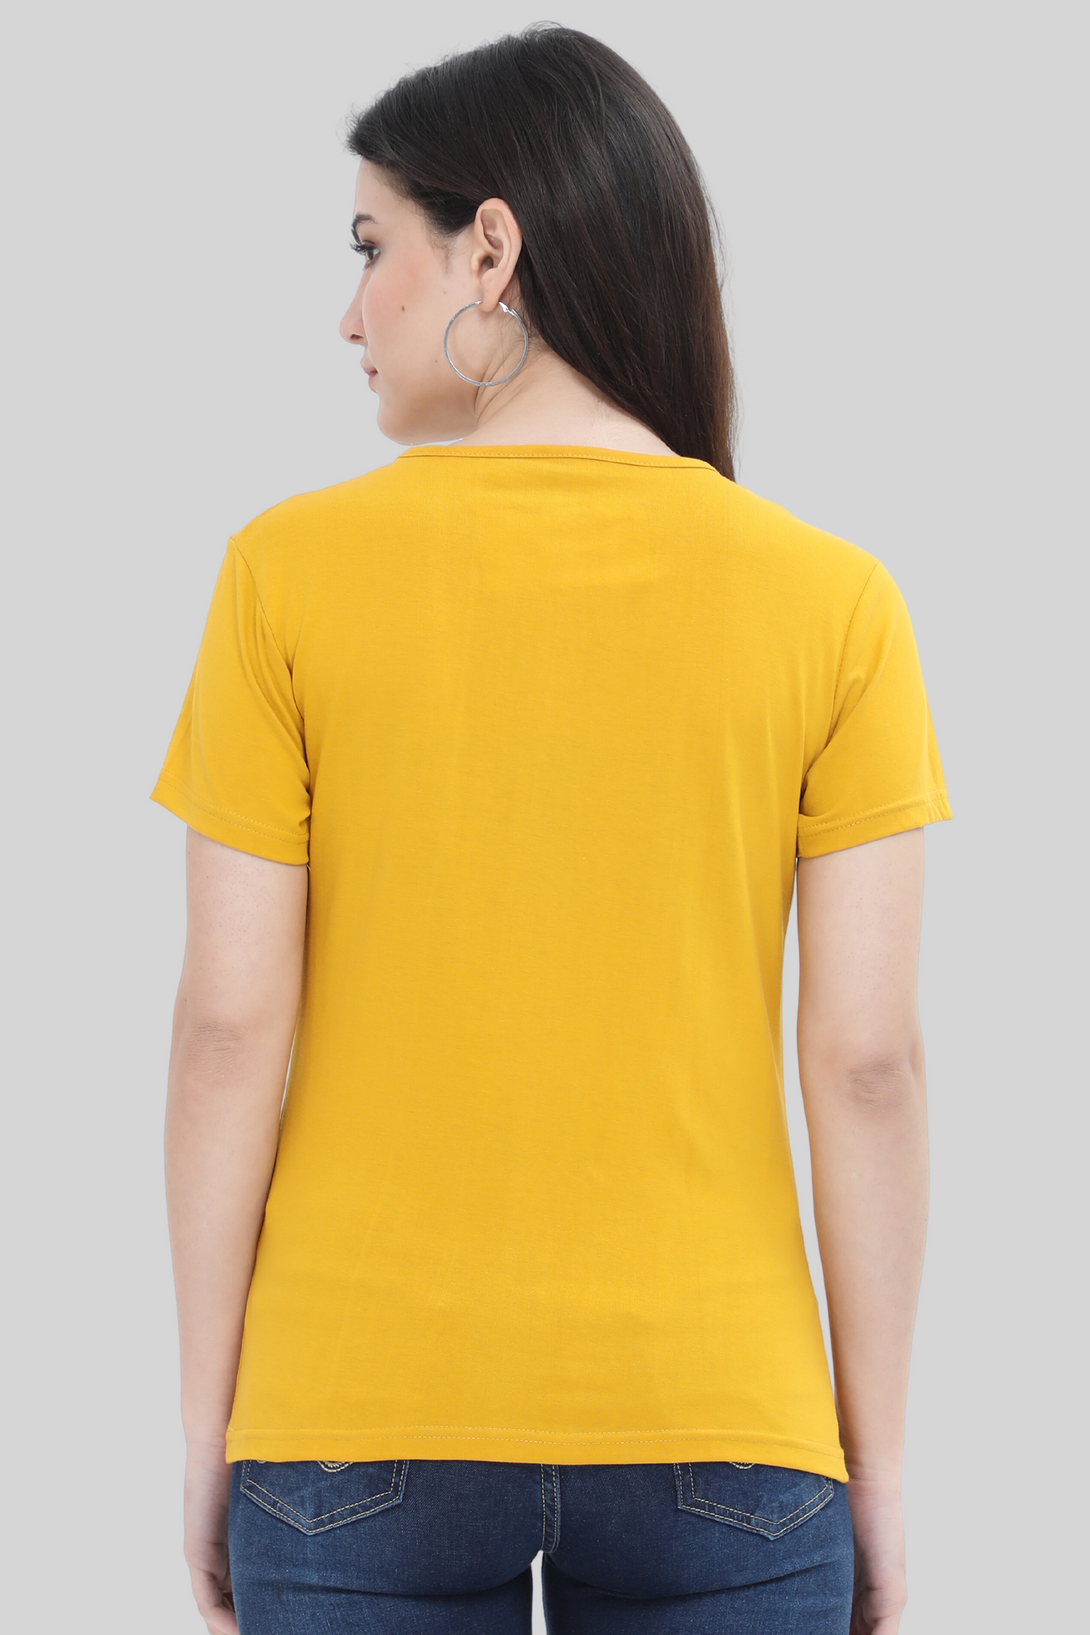 Mustard Yellow Scoop Neck T-Shirt For Women - WowWaves - 3